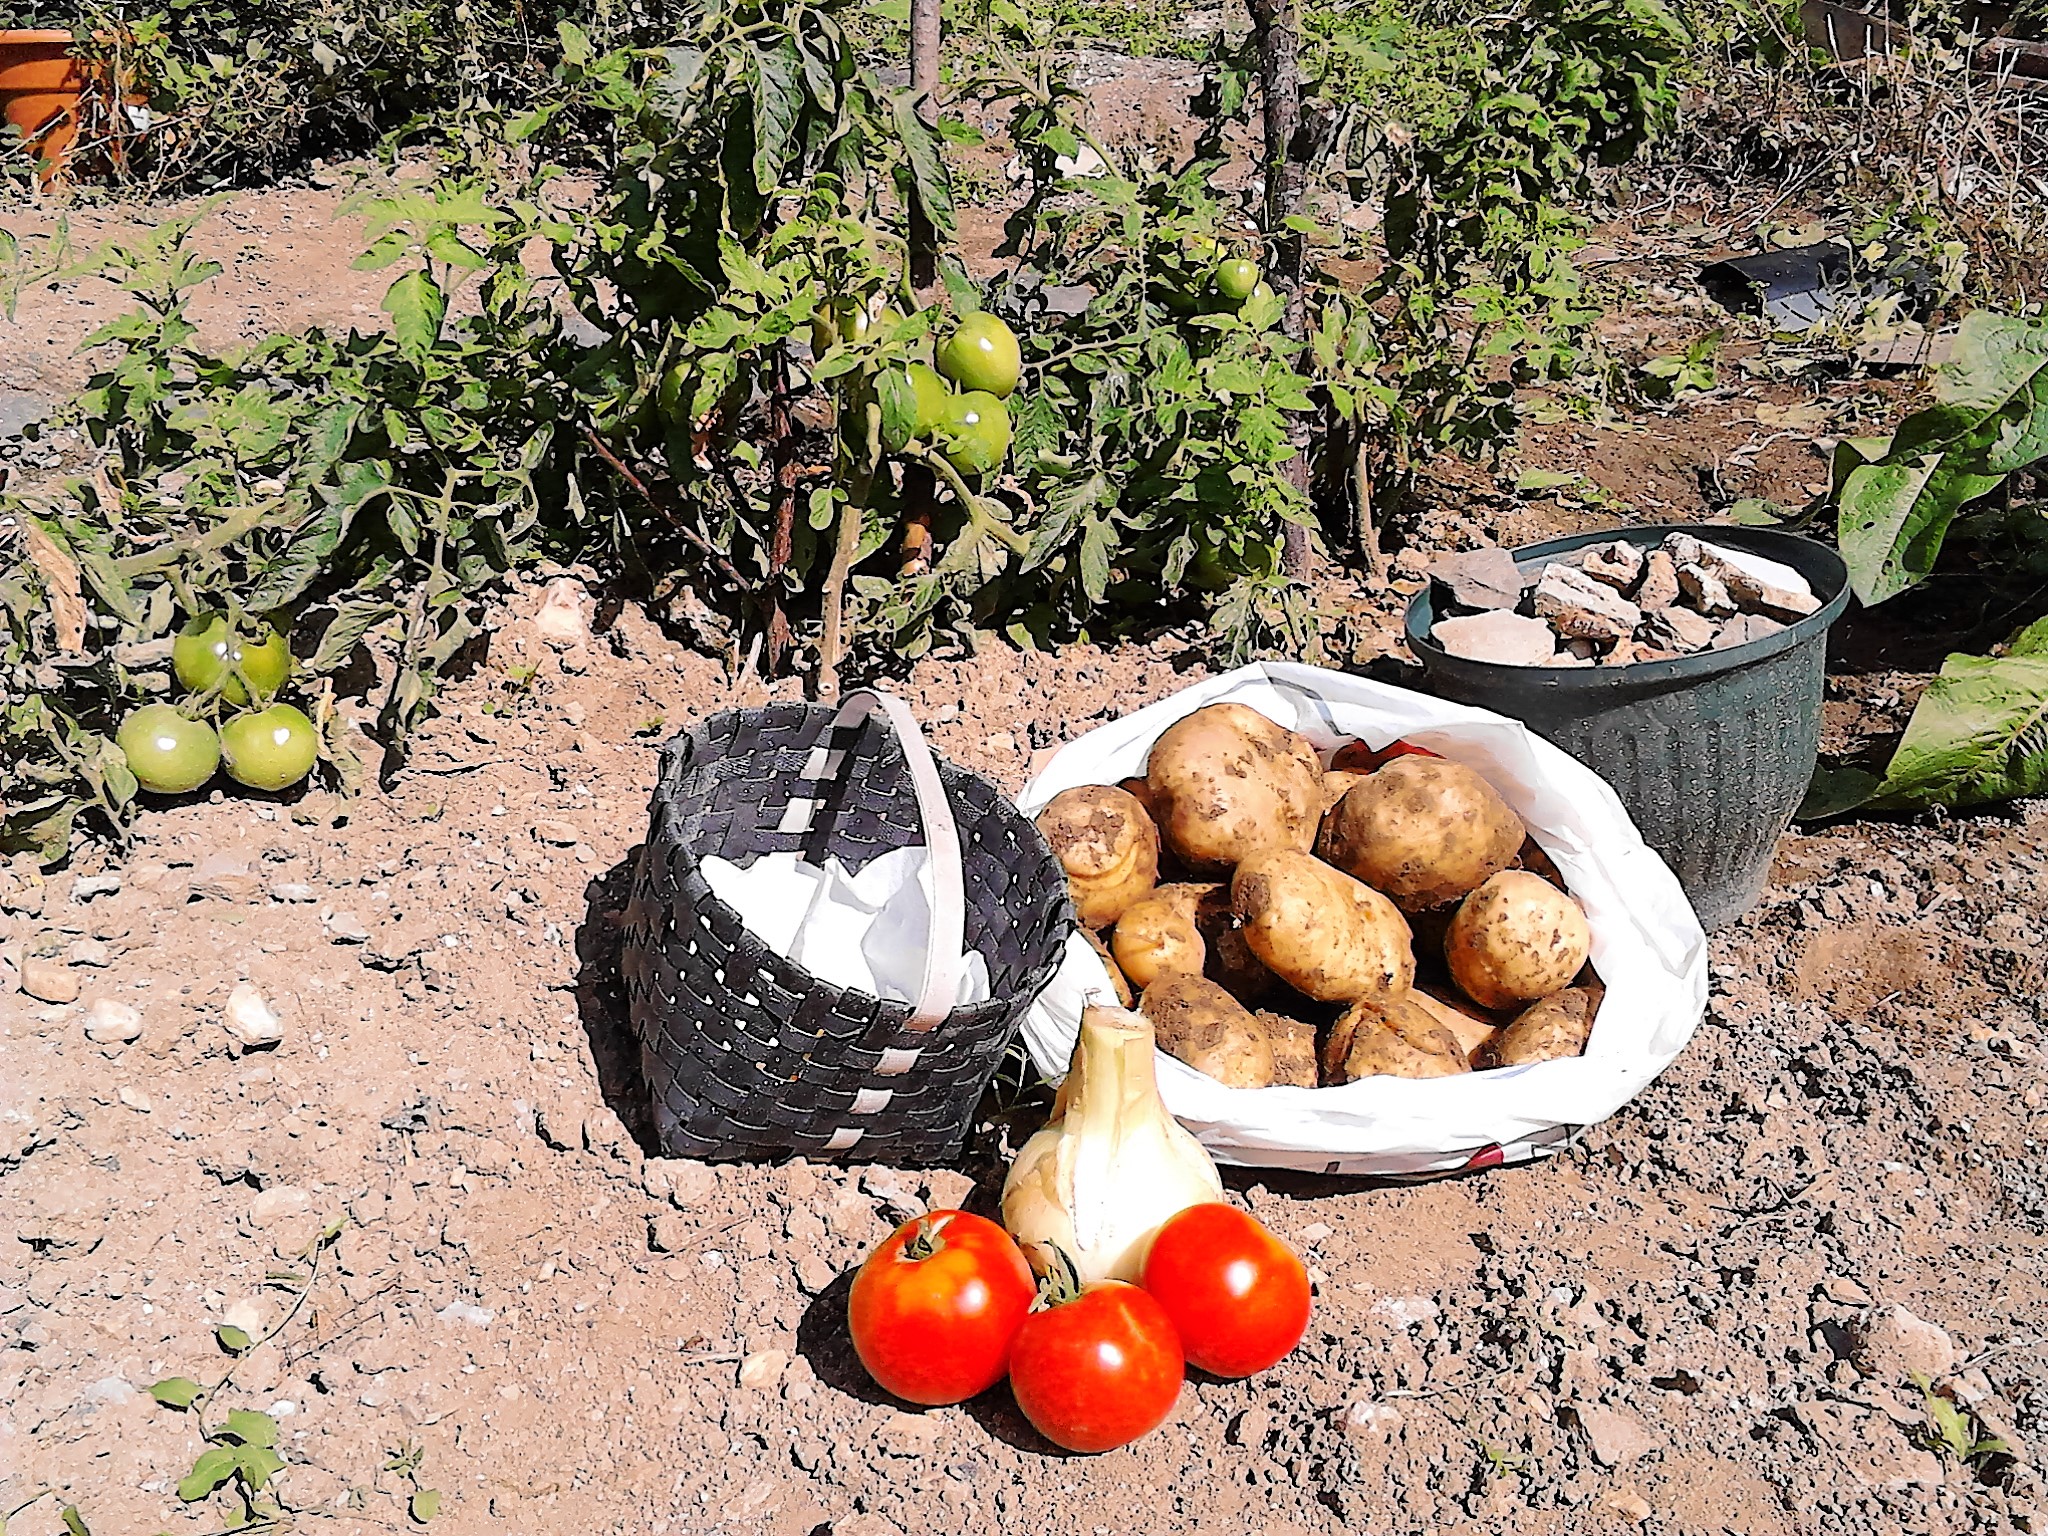 Huerta / Vegetable garden